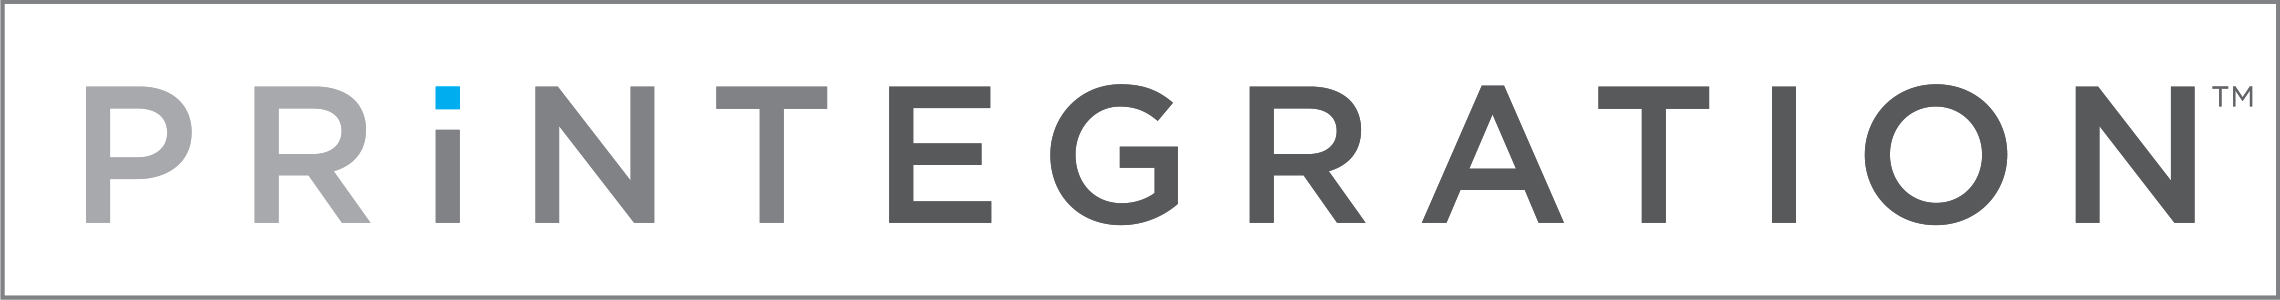 Printegration logo From Concept to Consumer